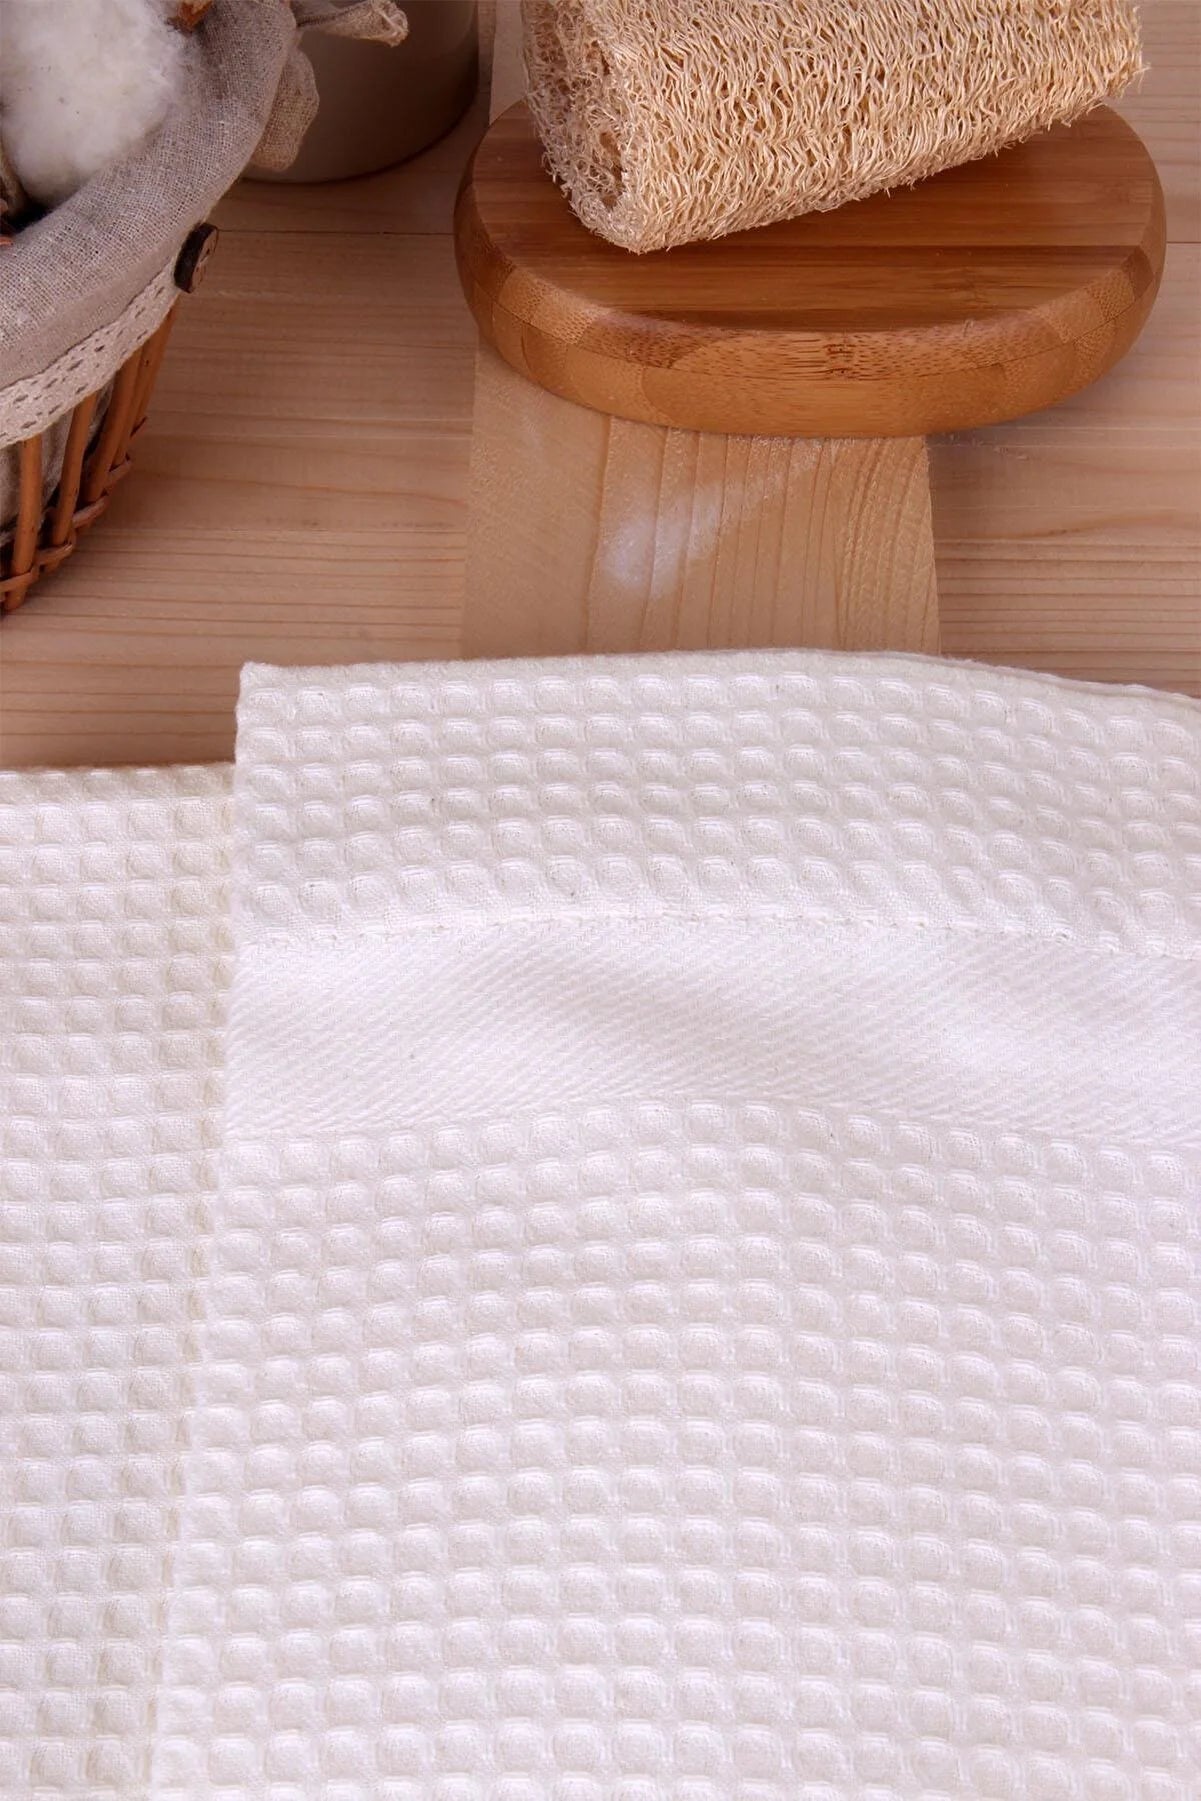 Alexa Do Cotton Kitchen Towels set of 2